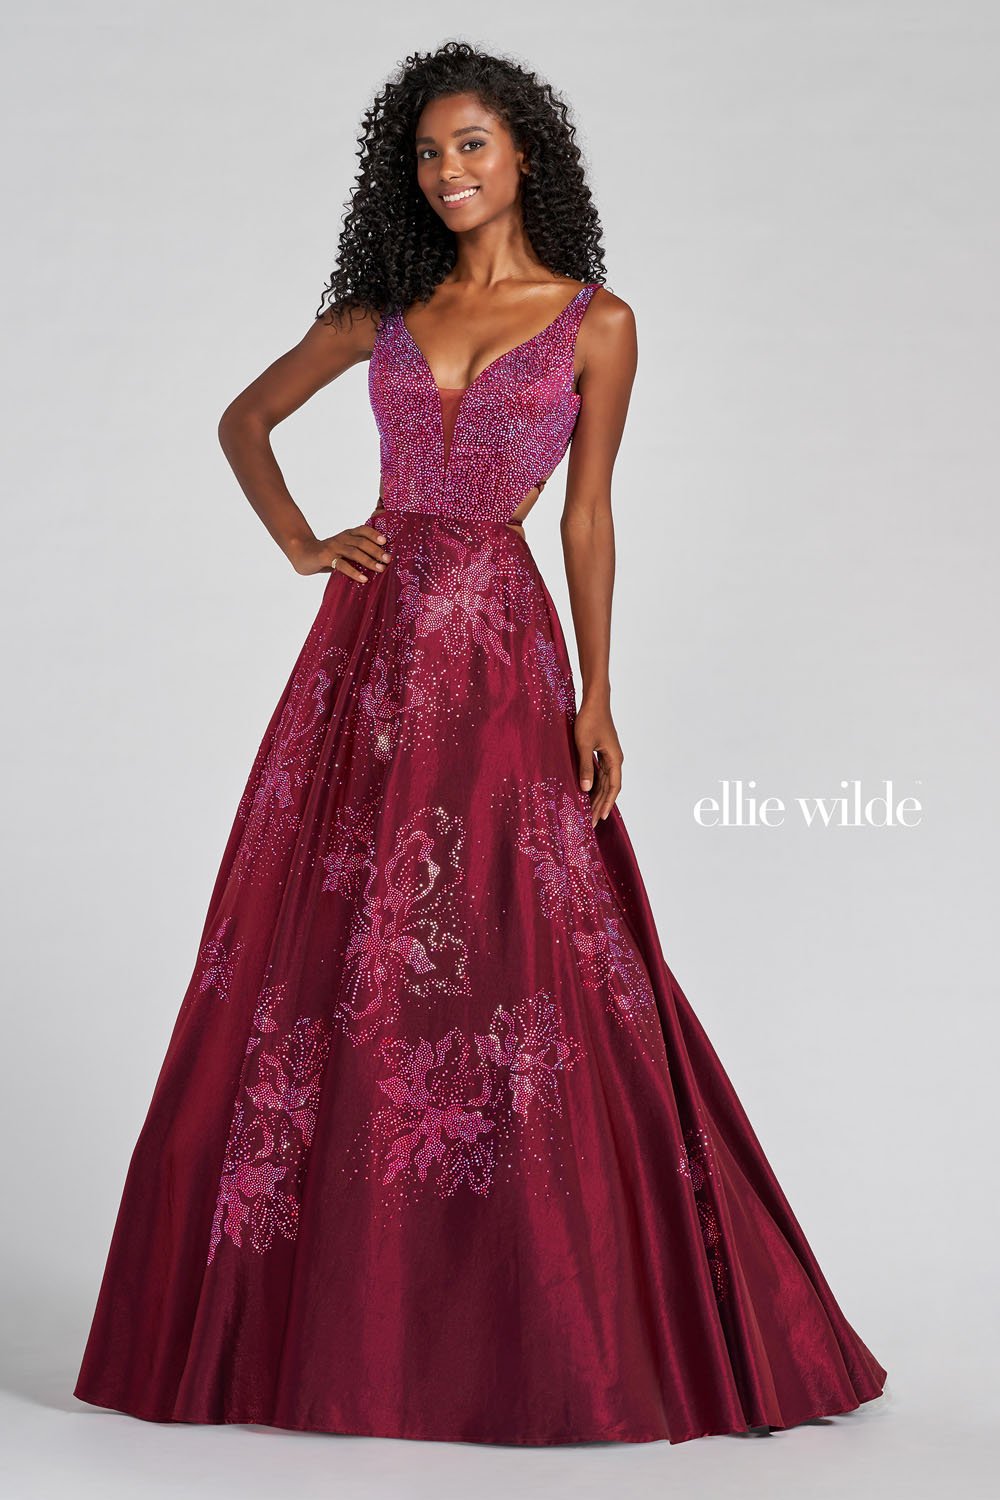 Ellie Wilde Wine EW122025 Prom Dress Image.  Wine formal dress.